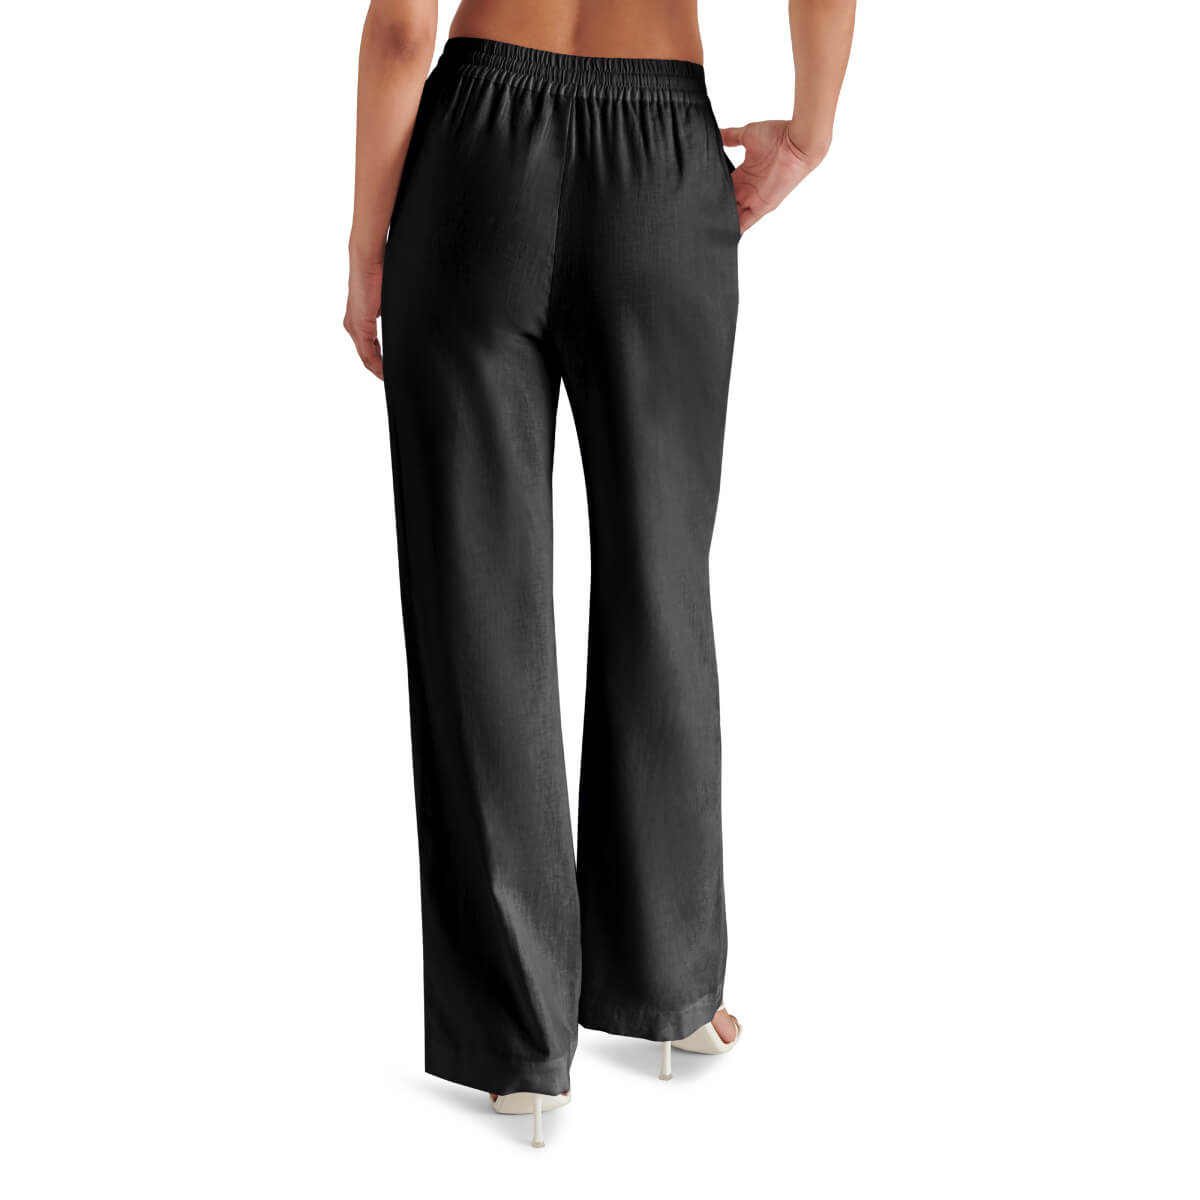 Steve Madden Venetia Drawstring Pants black back | MILK MONEY milkmoney.co | cute pants for women. cute trendy pants.